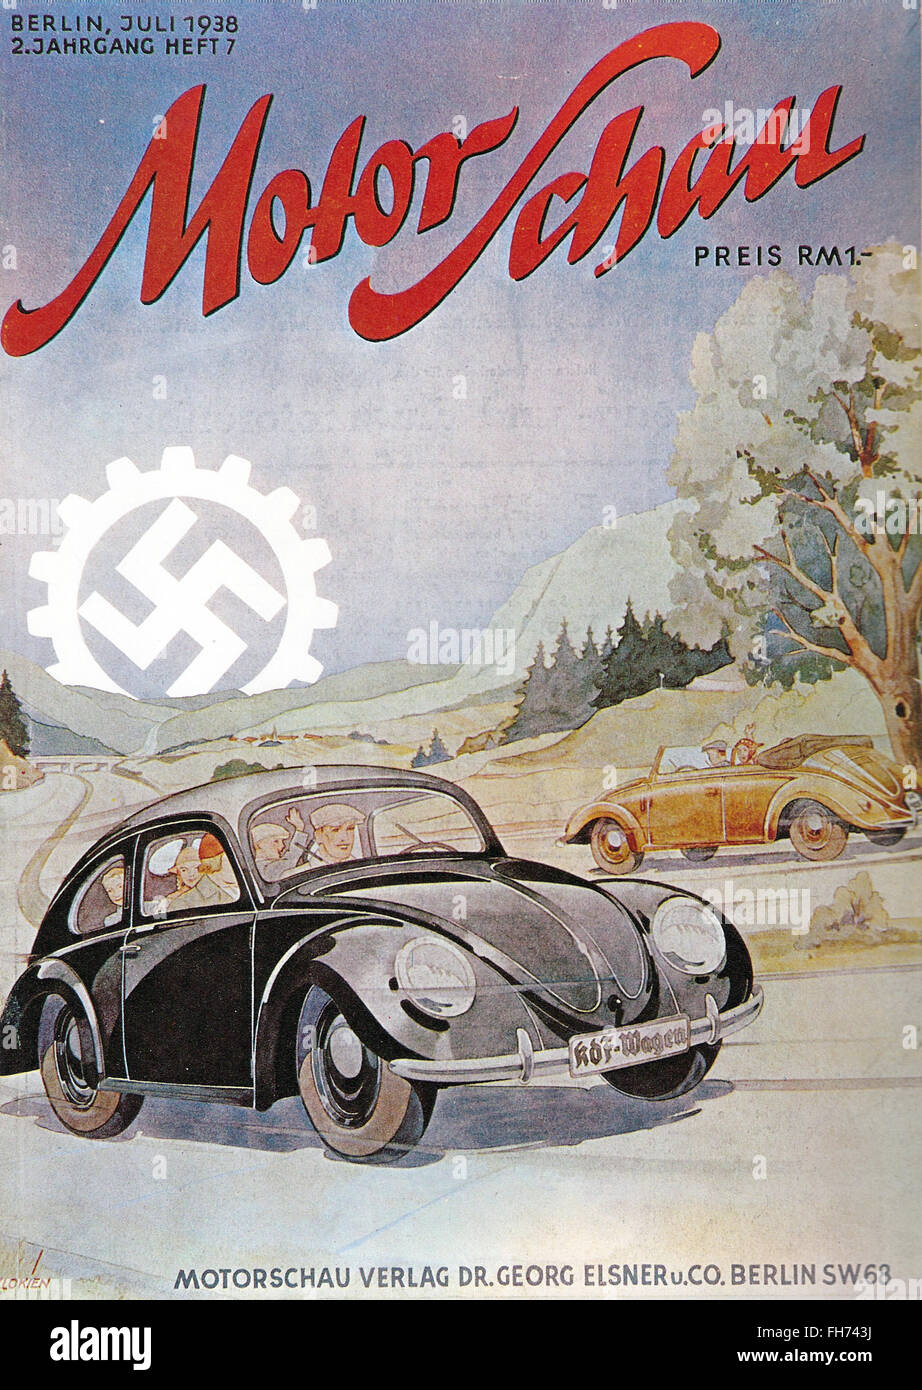 Motorschau Wolkswagen  - German Nazi Propaganda Poster - WWII Stock Photo